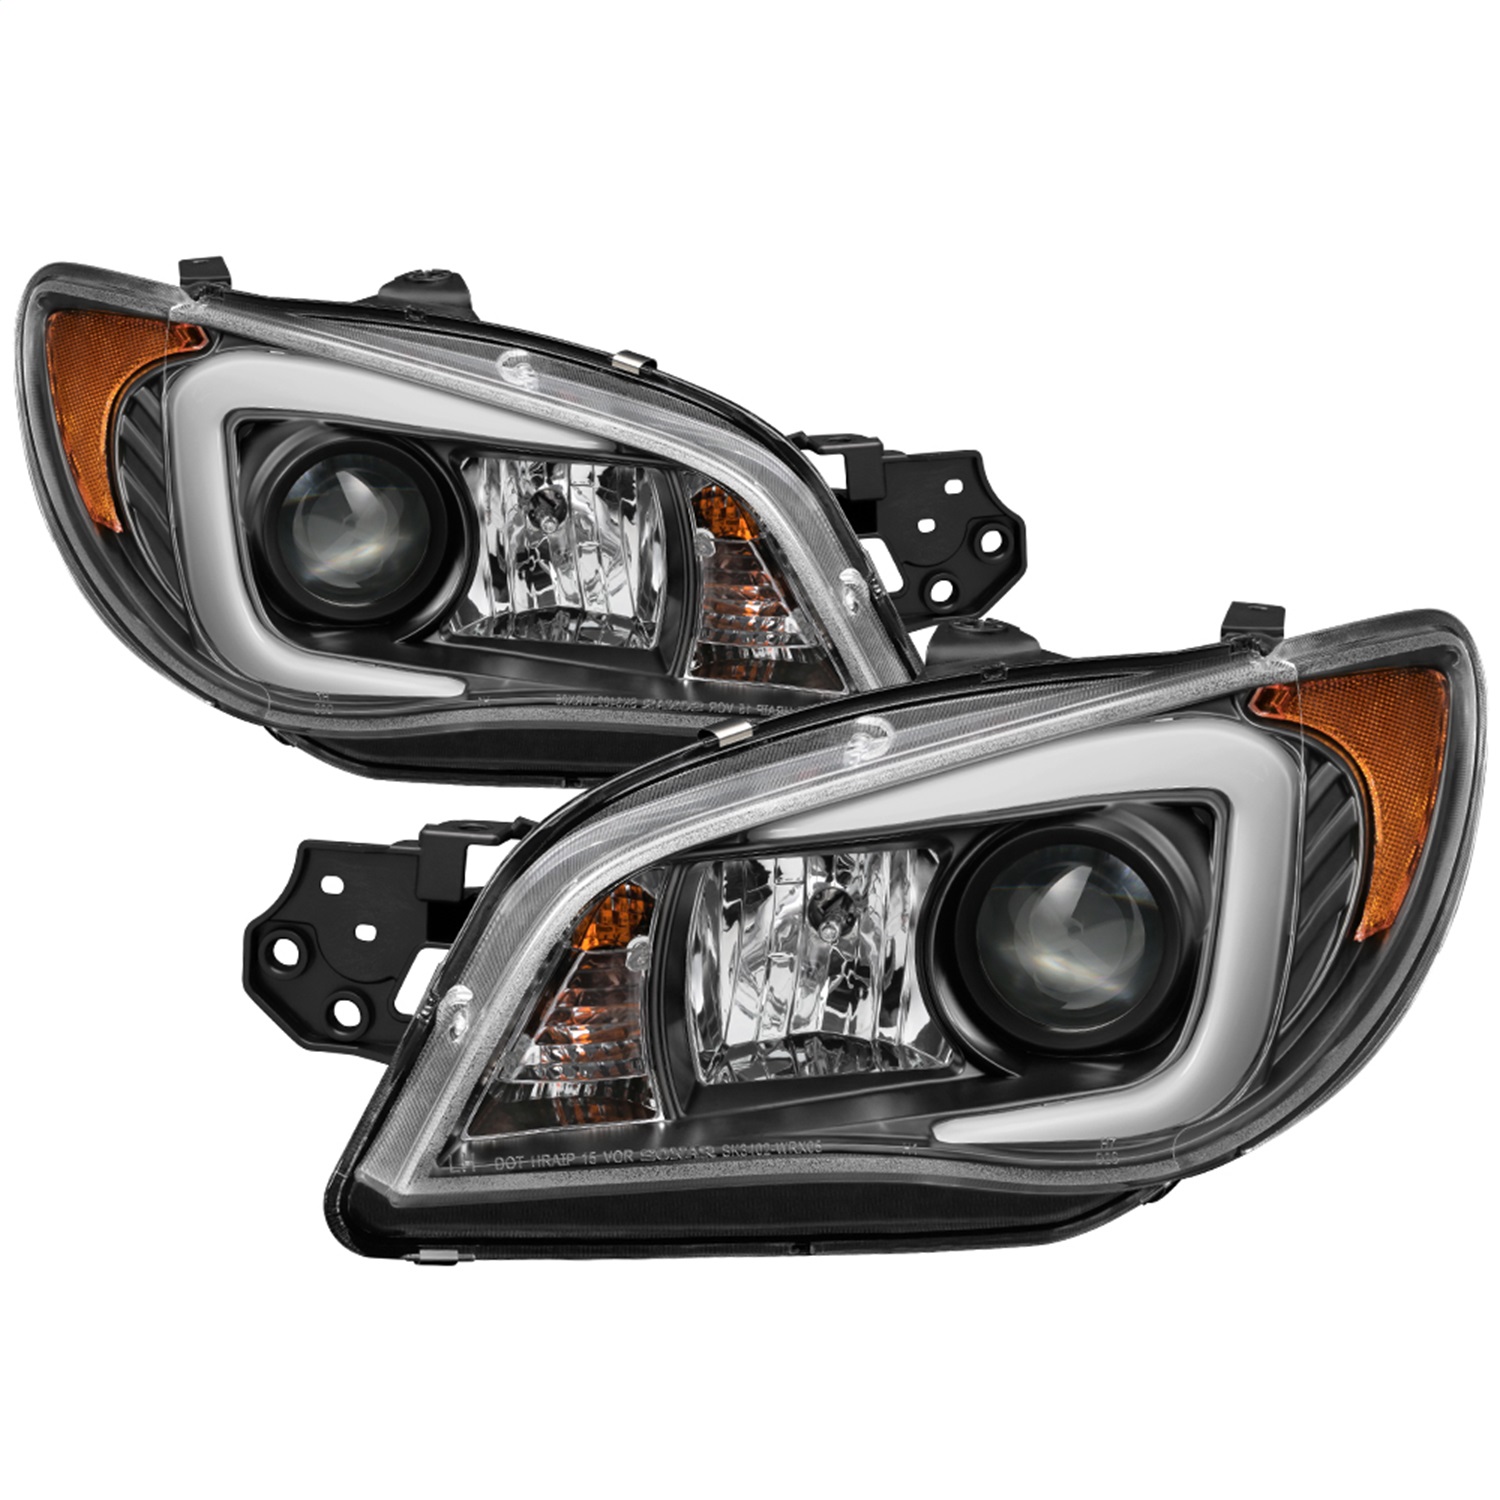 Spyder Auto 5083920 Halo DRL LED Projector Headlight Fits 06-07 Impreza